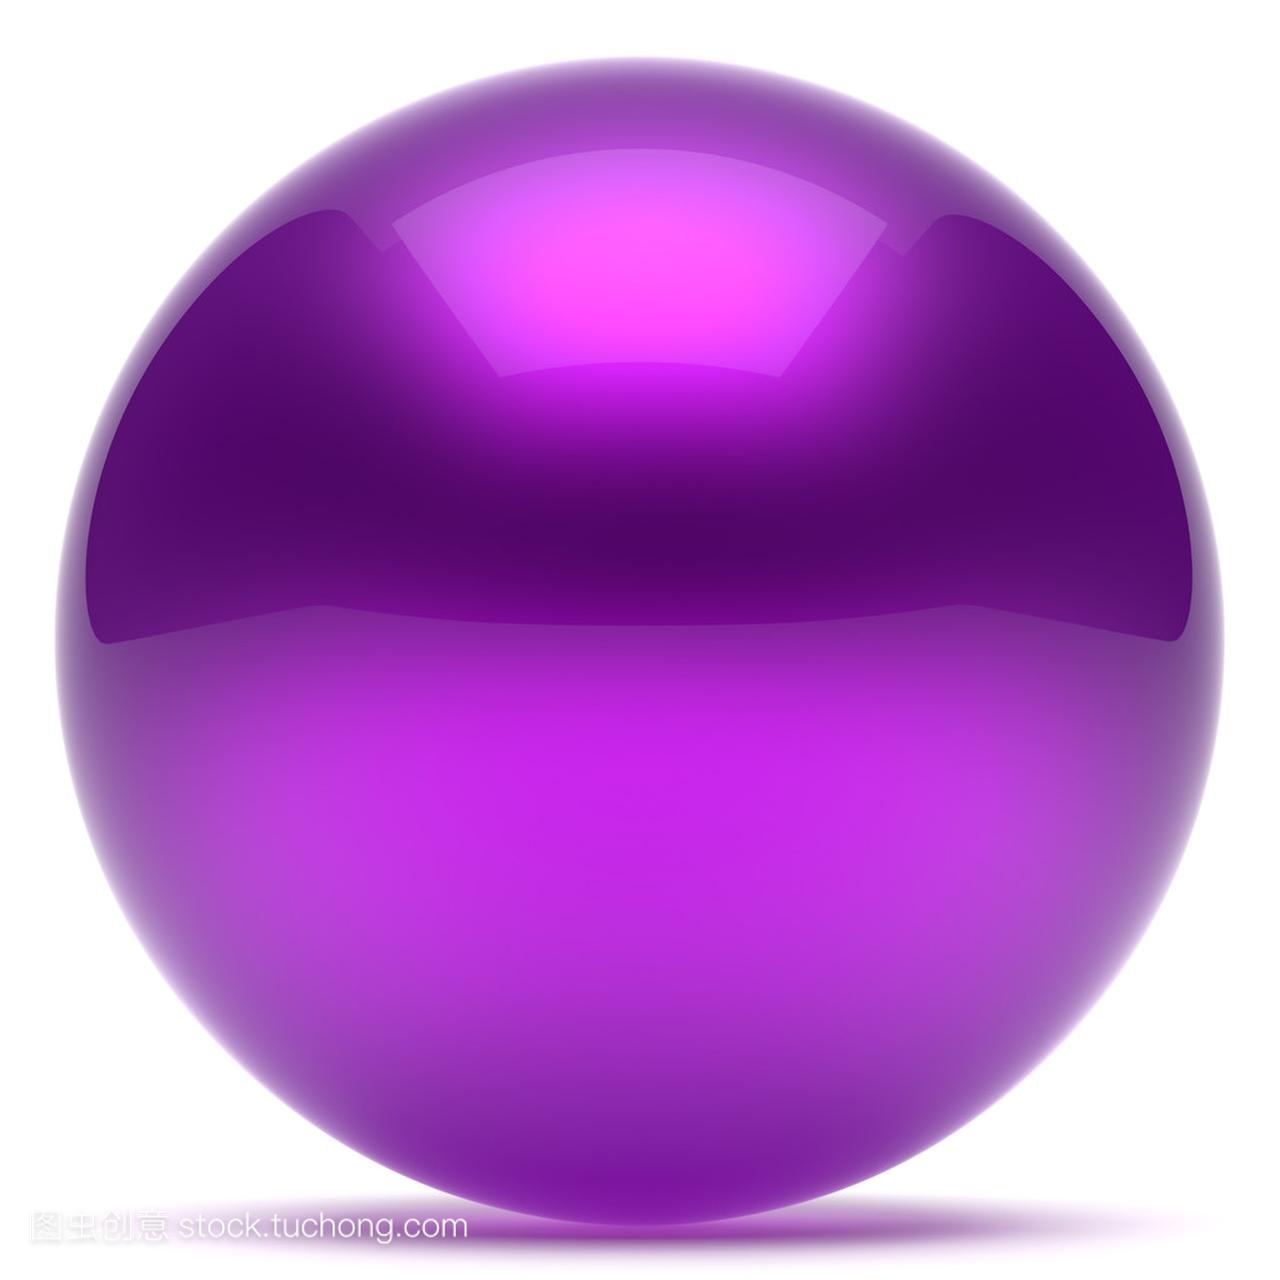 Purple sphere ball geometric shape round button basic circle